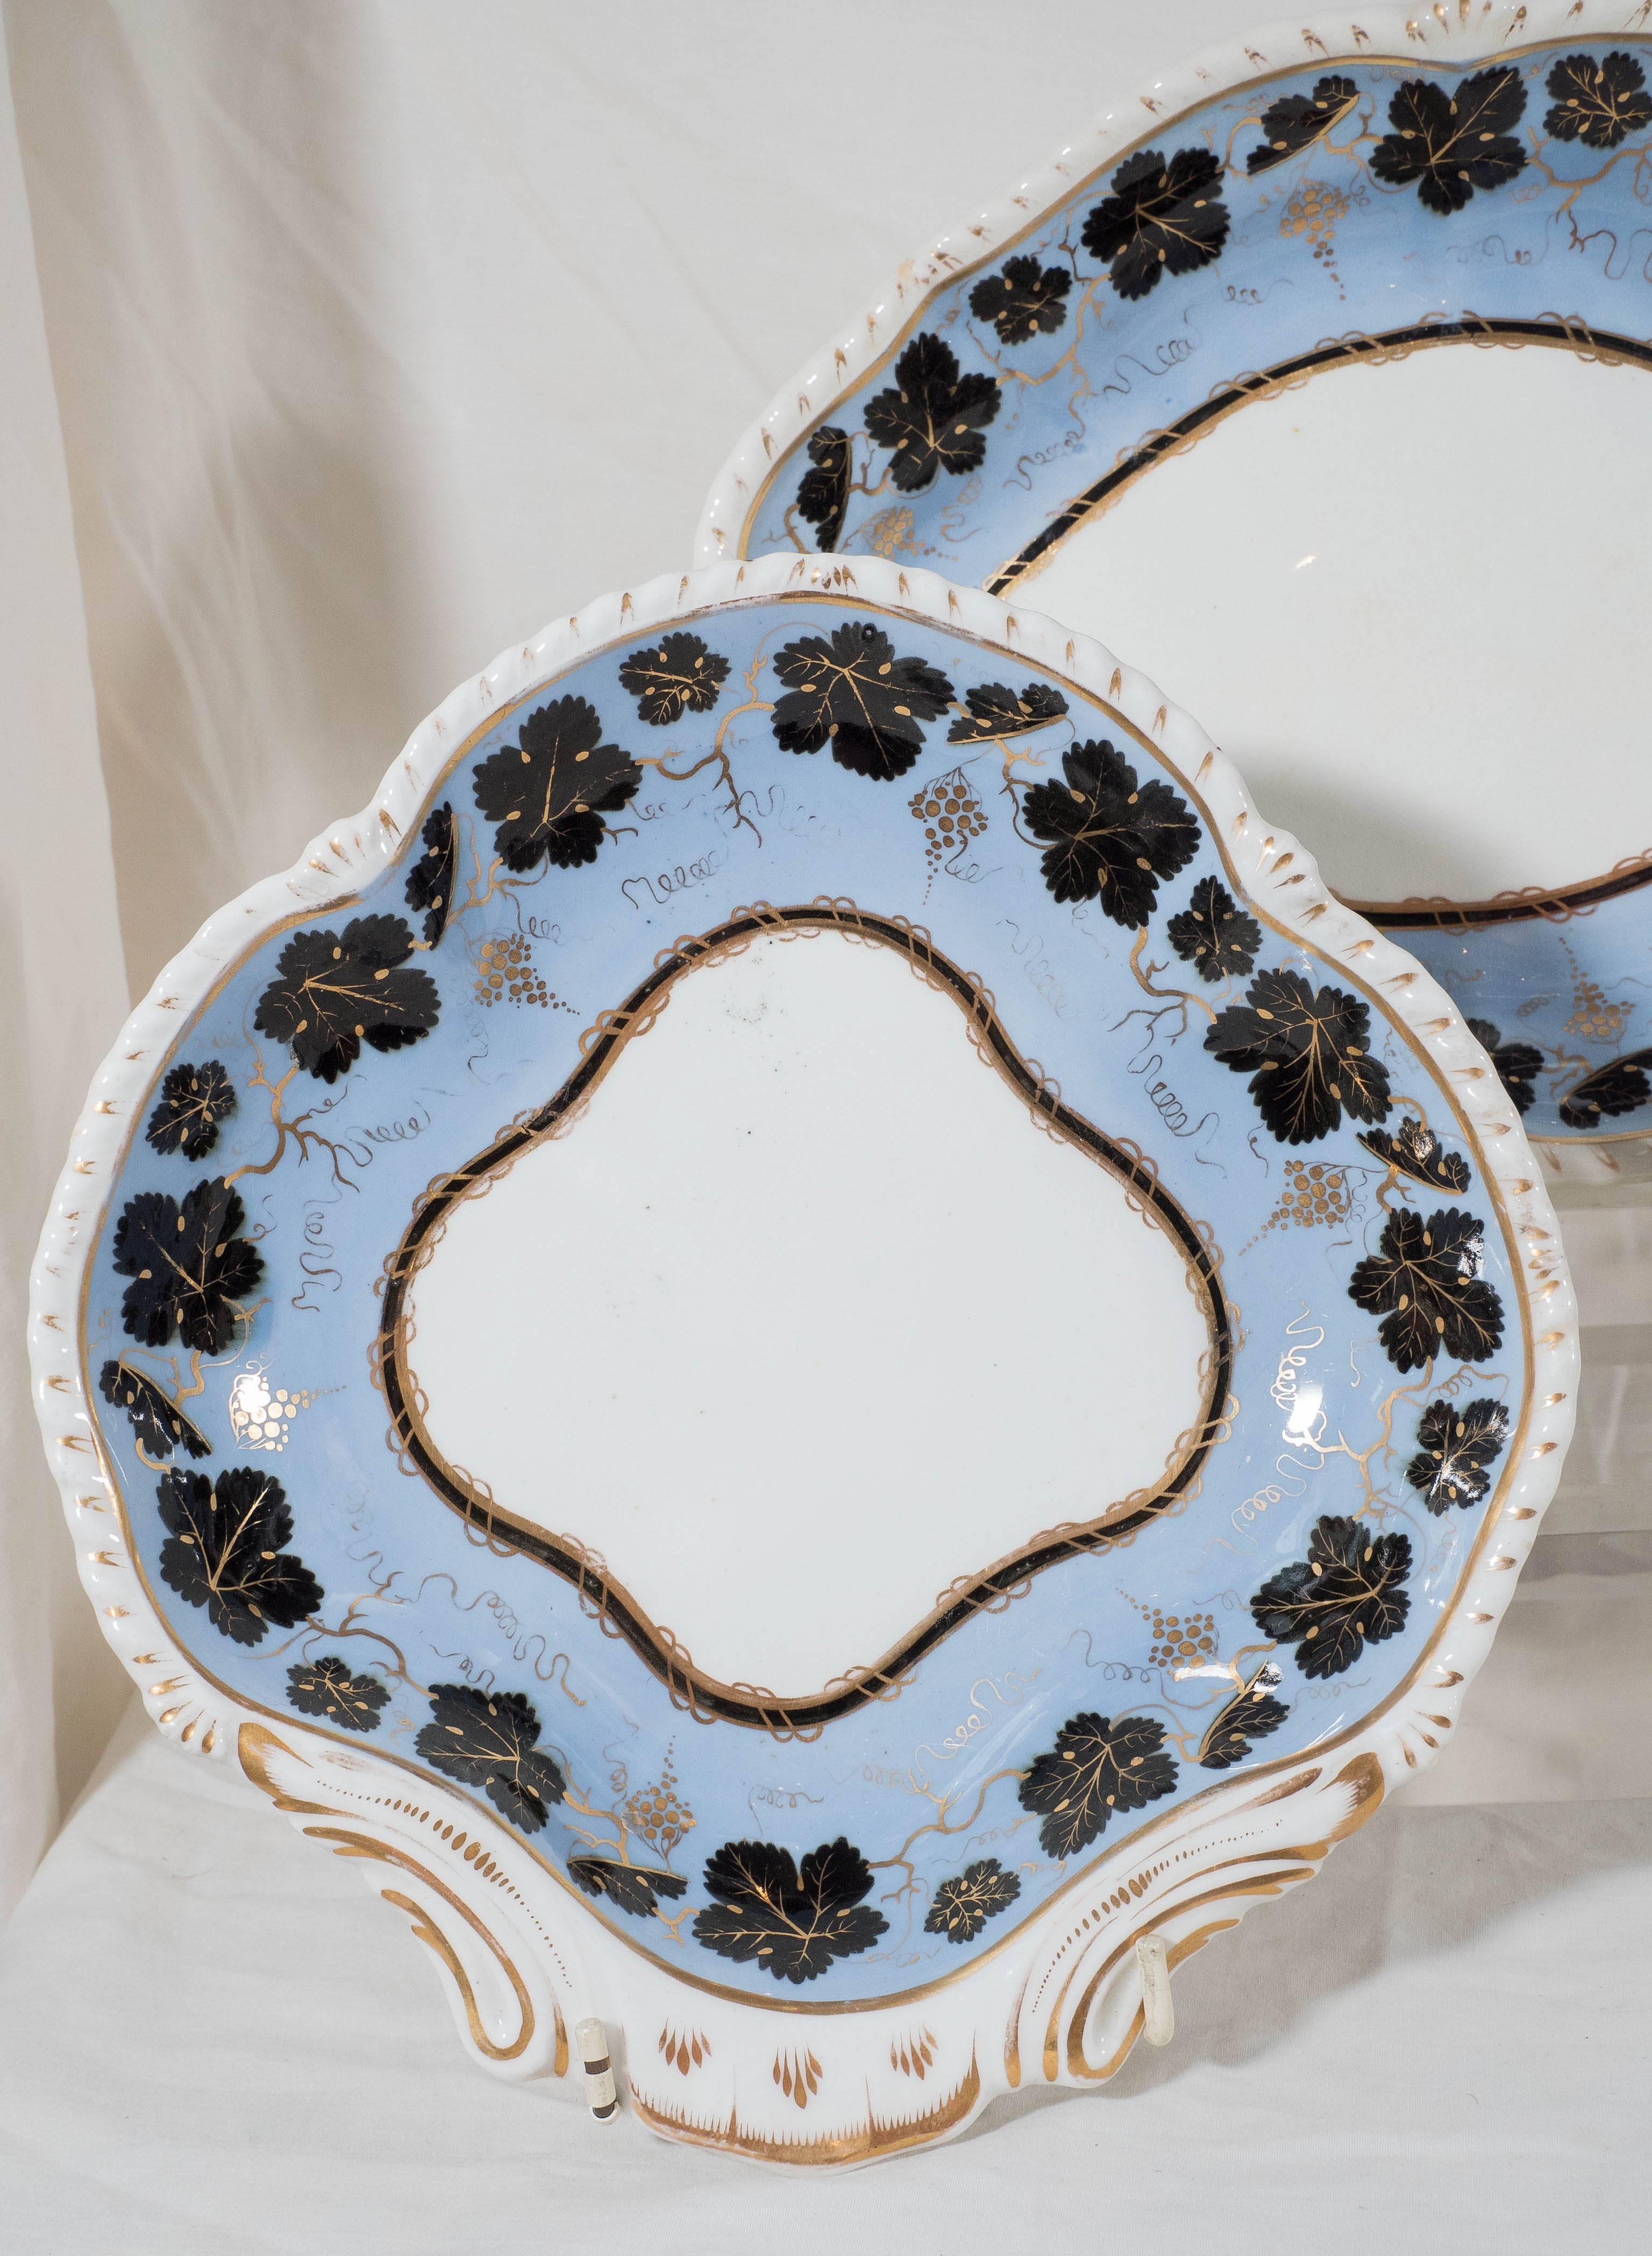 Antique Porcelain Light Blue Dishes Painted with Black Leaves (13 pieces NOT 15) (19. Jahrhundert)